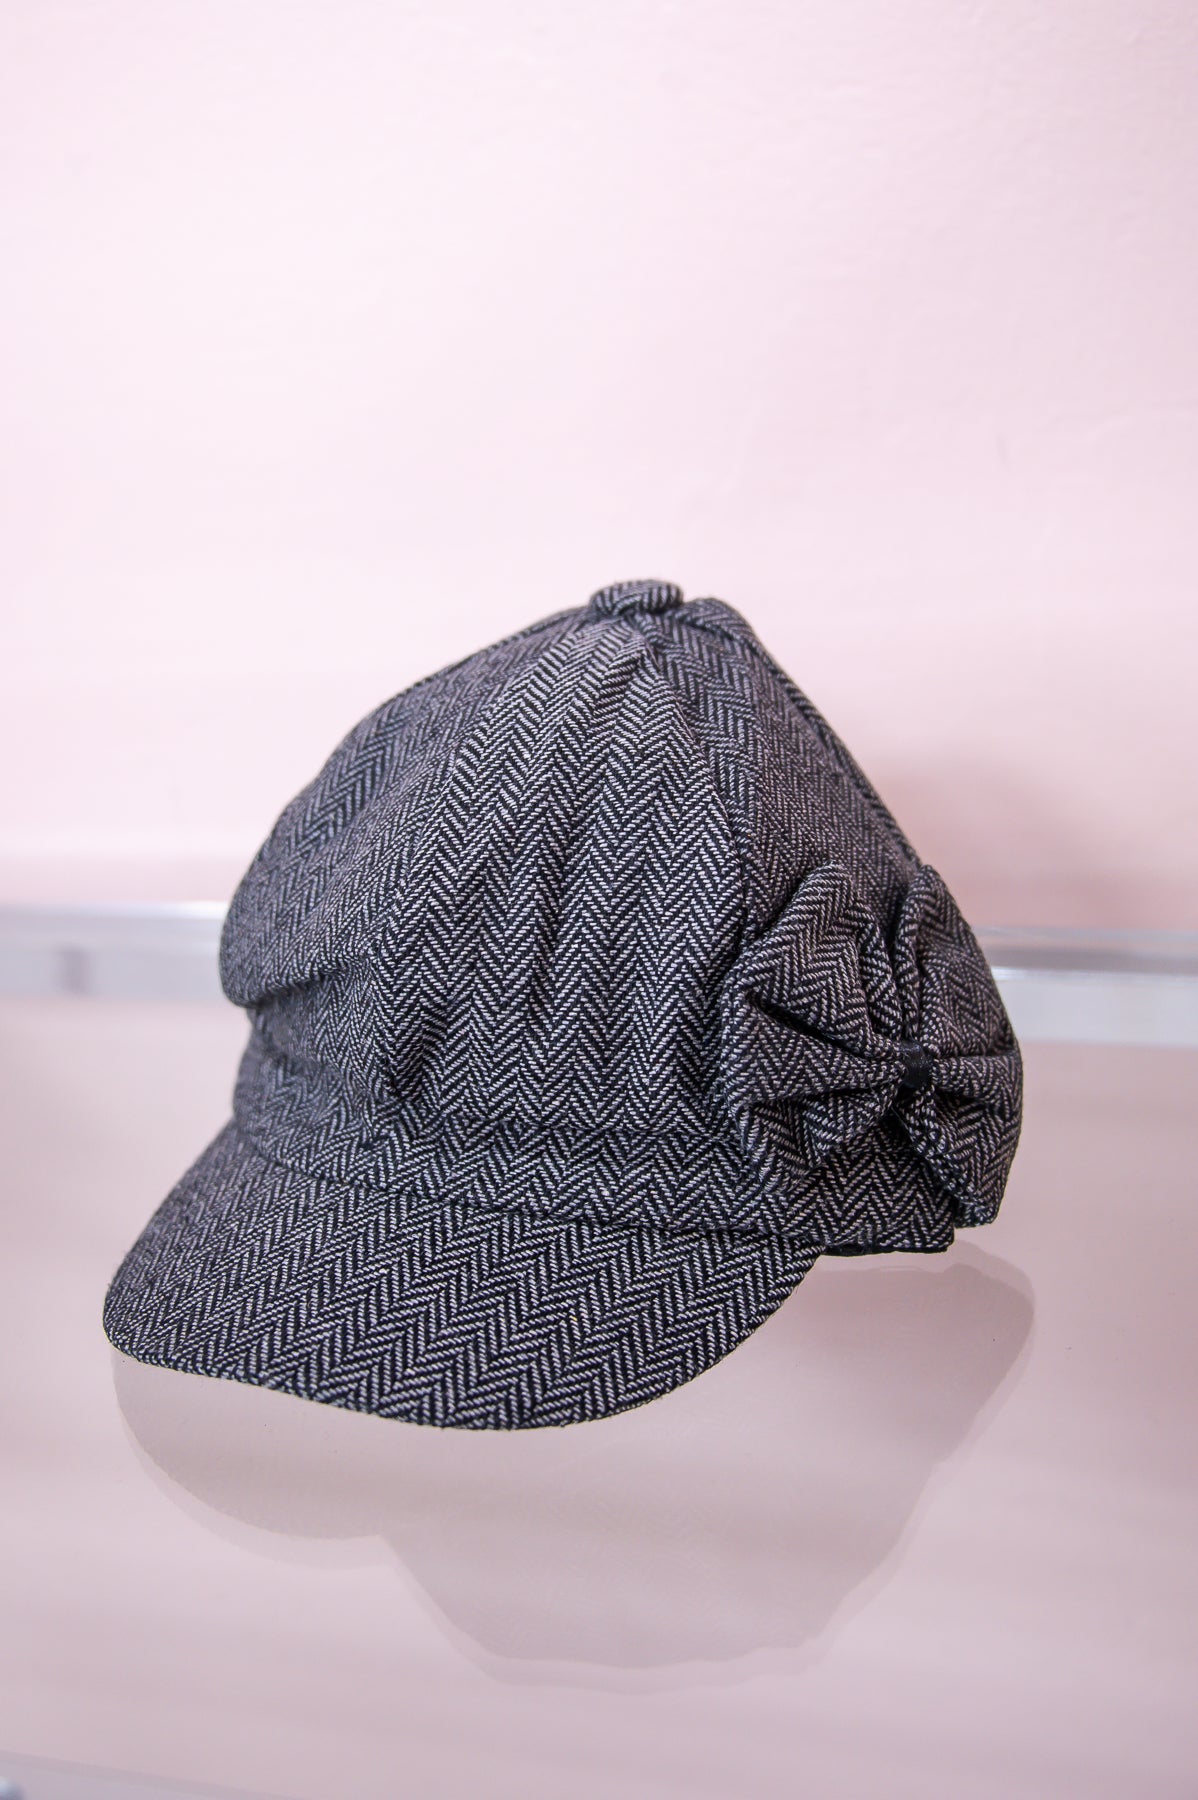 Gray Herringbone Newsboy Hat - HAT1476GR